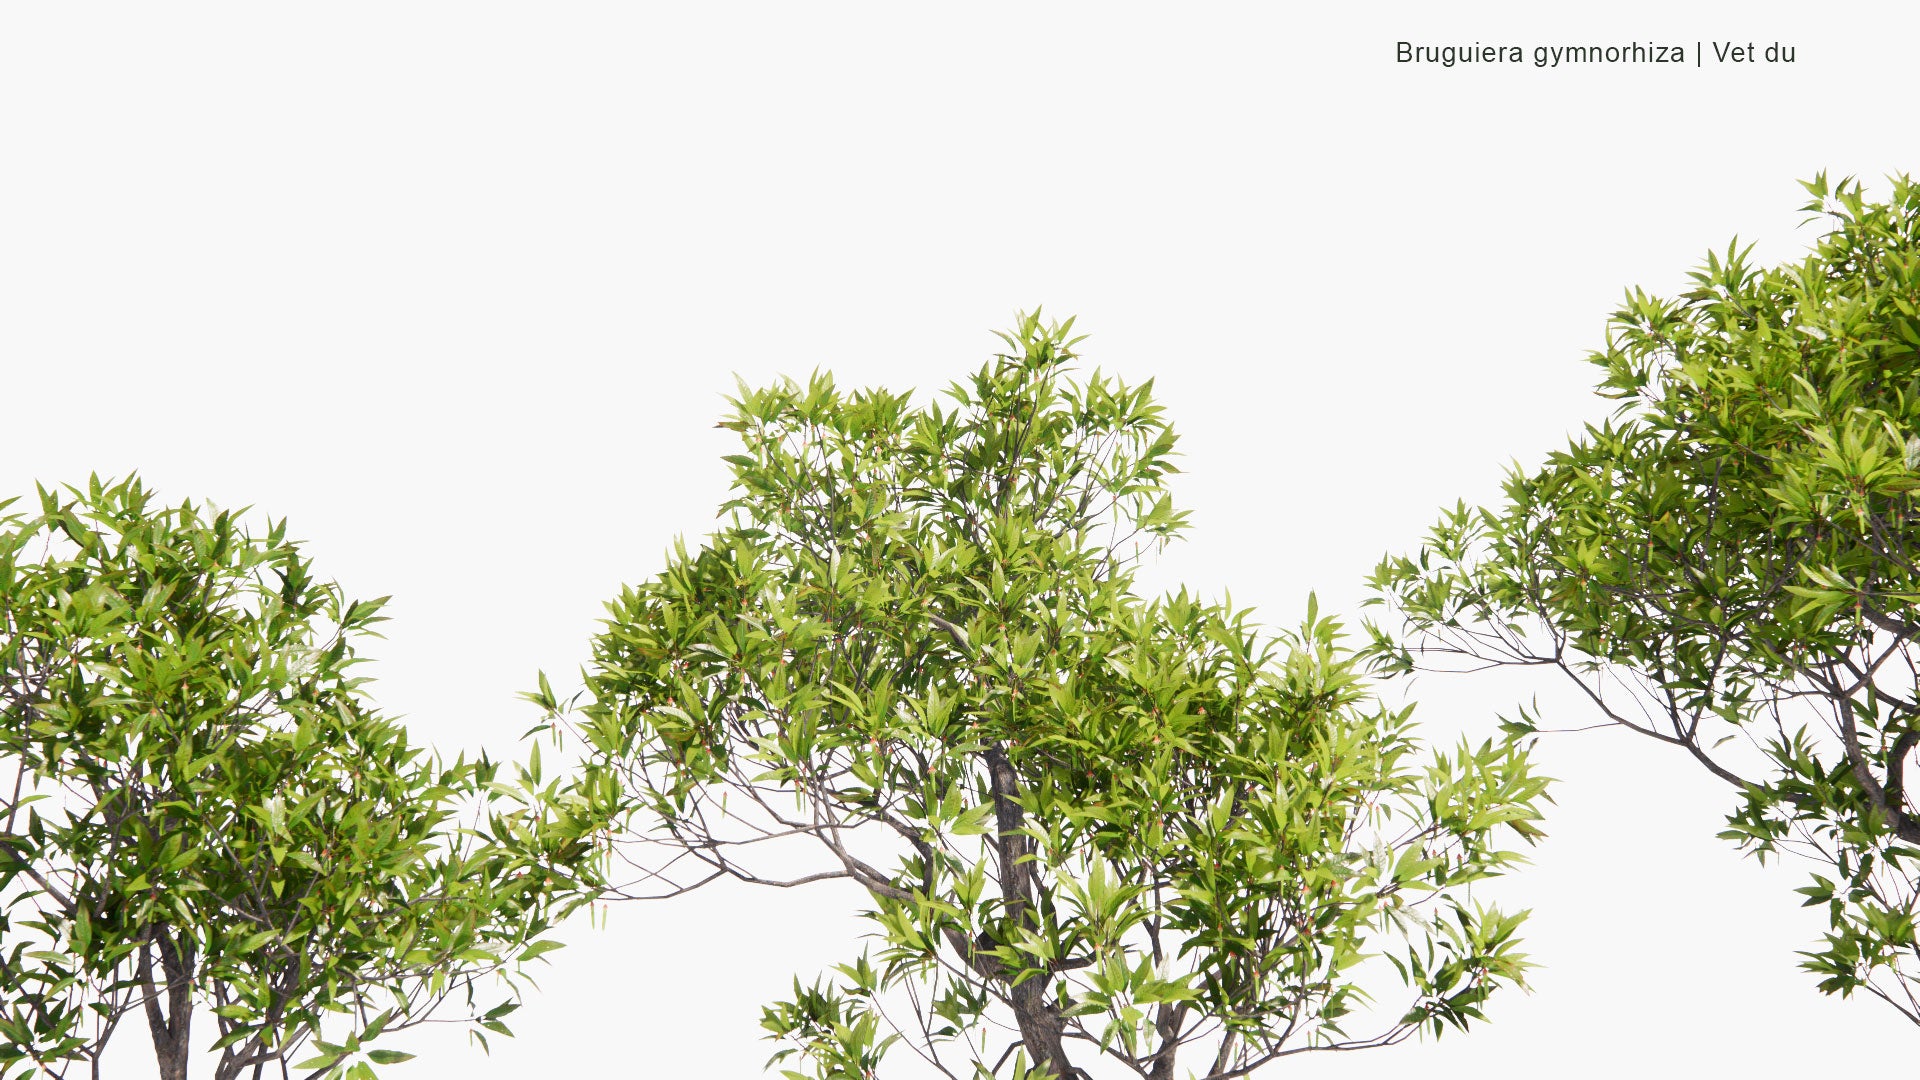 Low Poly Bruguiera Gymnorhiza - Vet Du, Large-Leafed Orange Mangrove, Oriental Mangrove (3D Model)